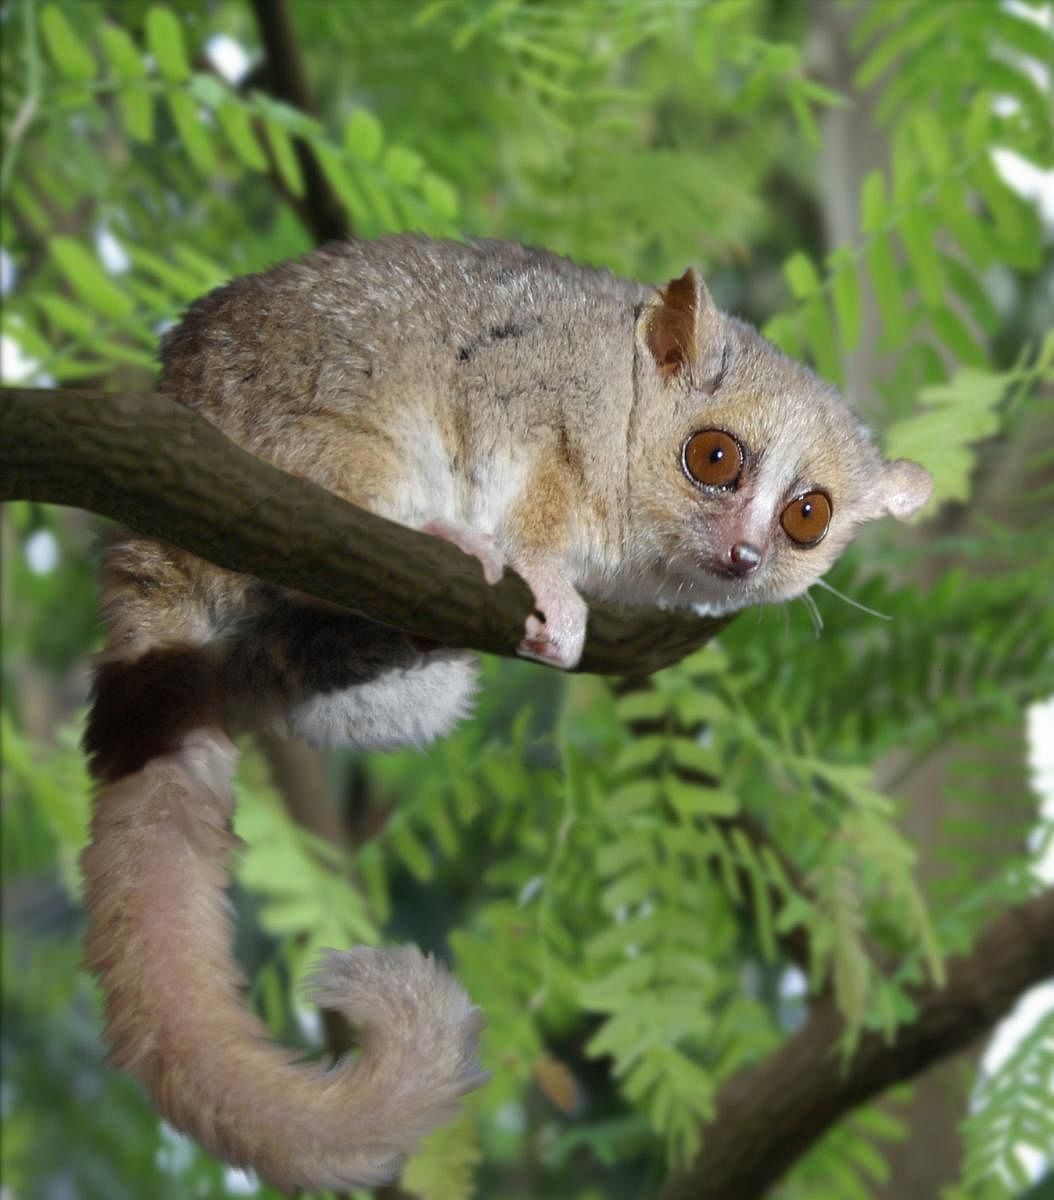 Lemur Image credit: Gabriella Skollar/Wikimedia Commons